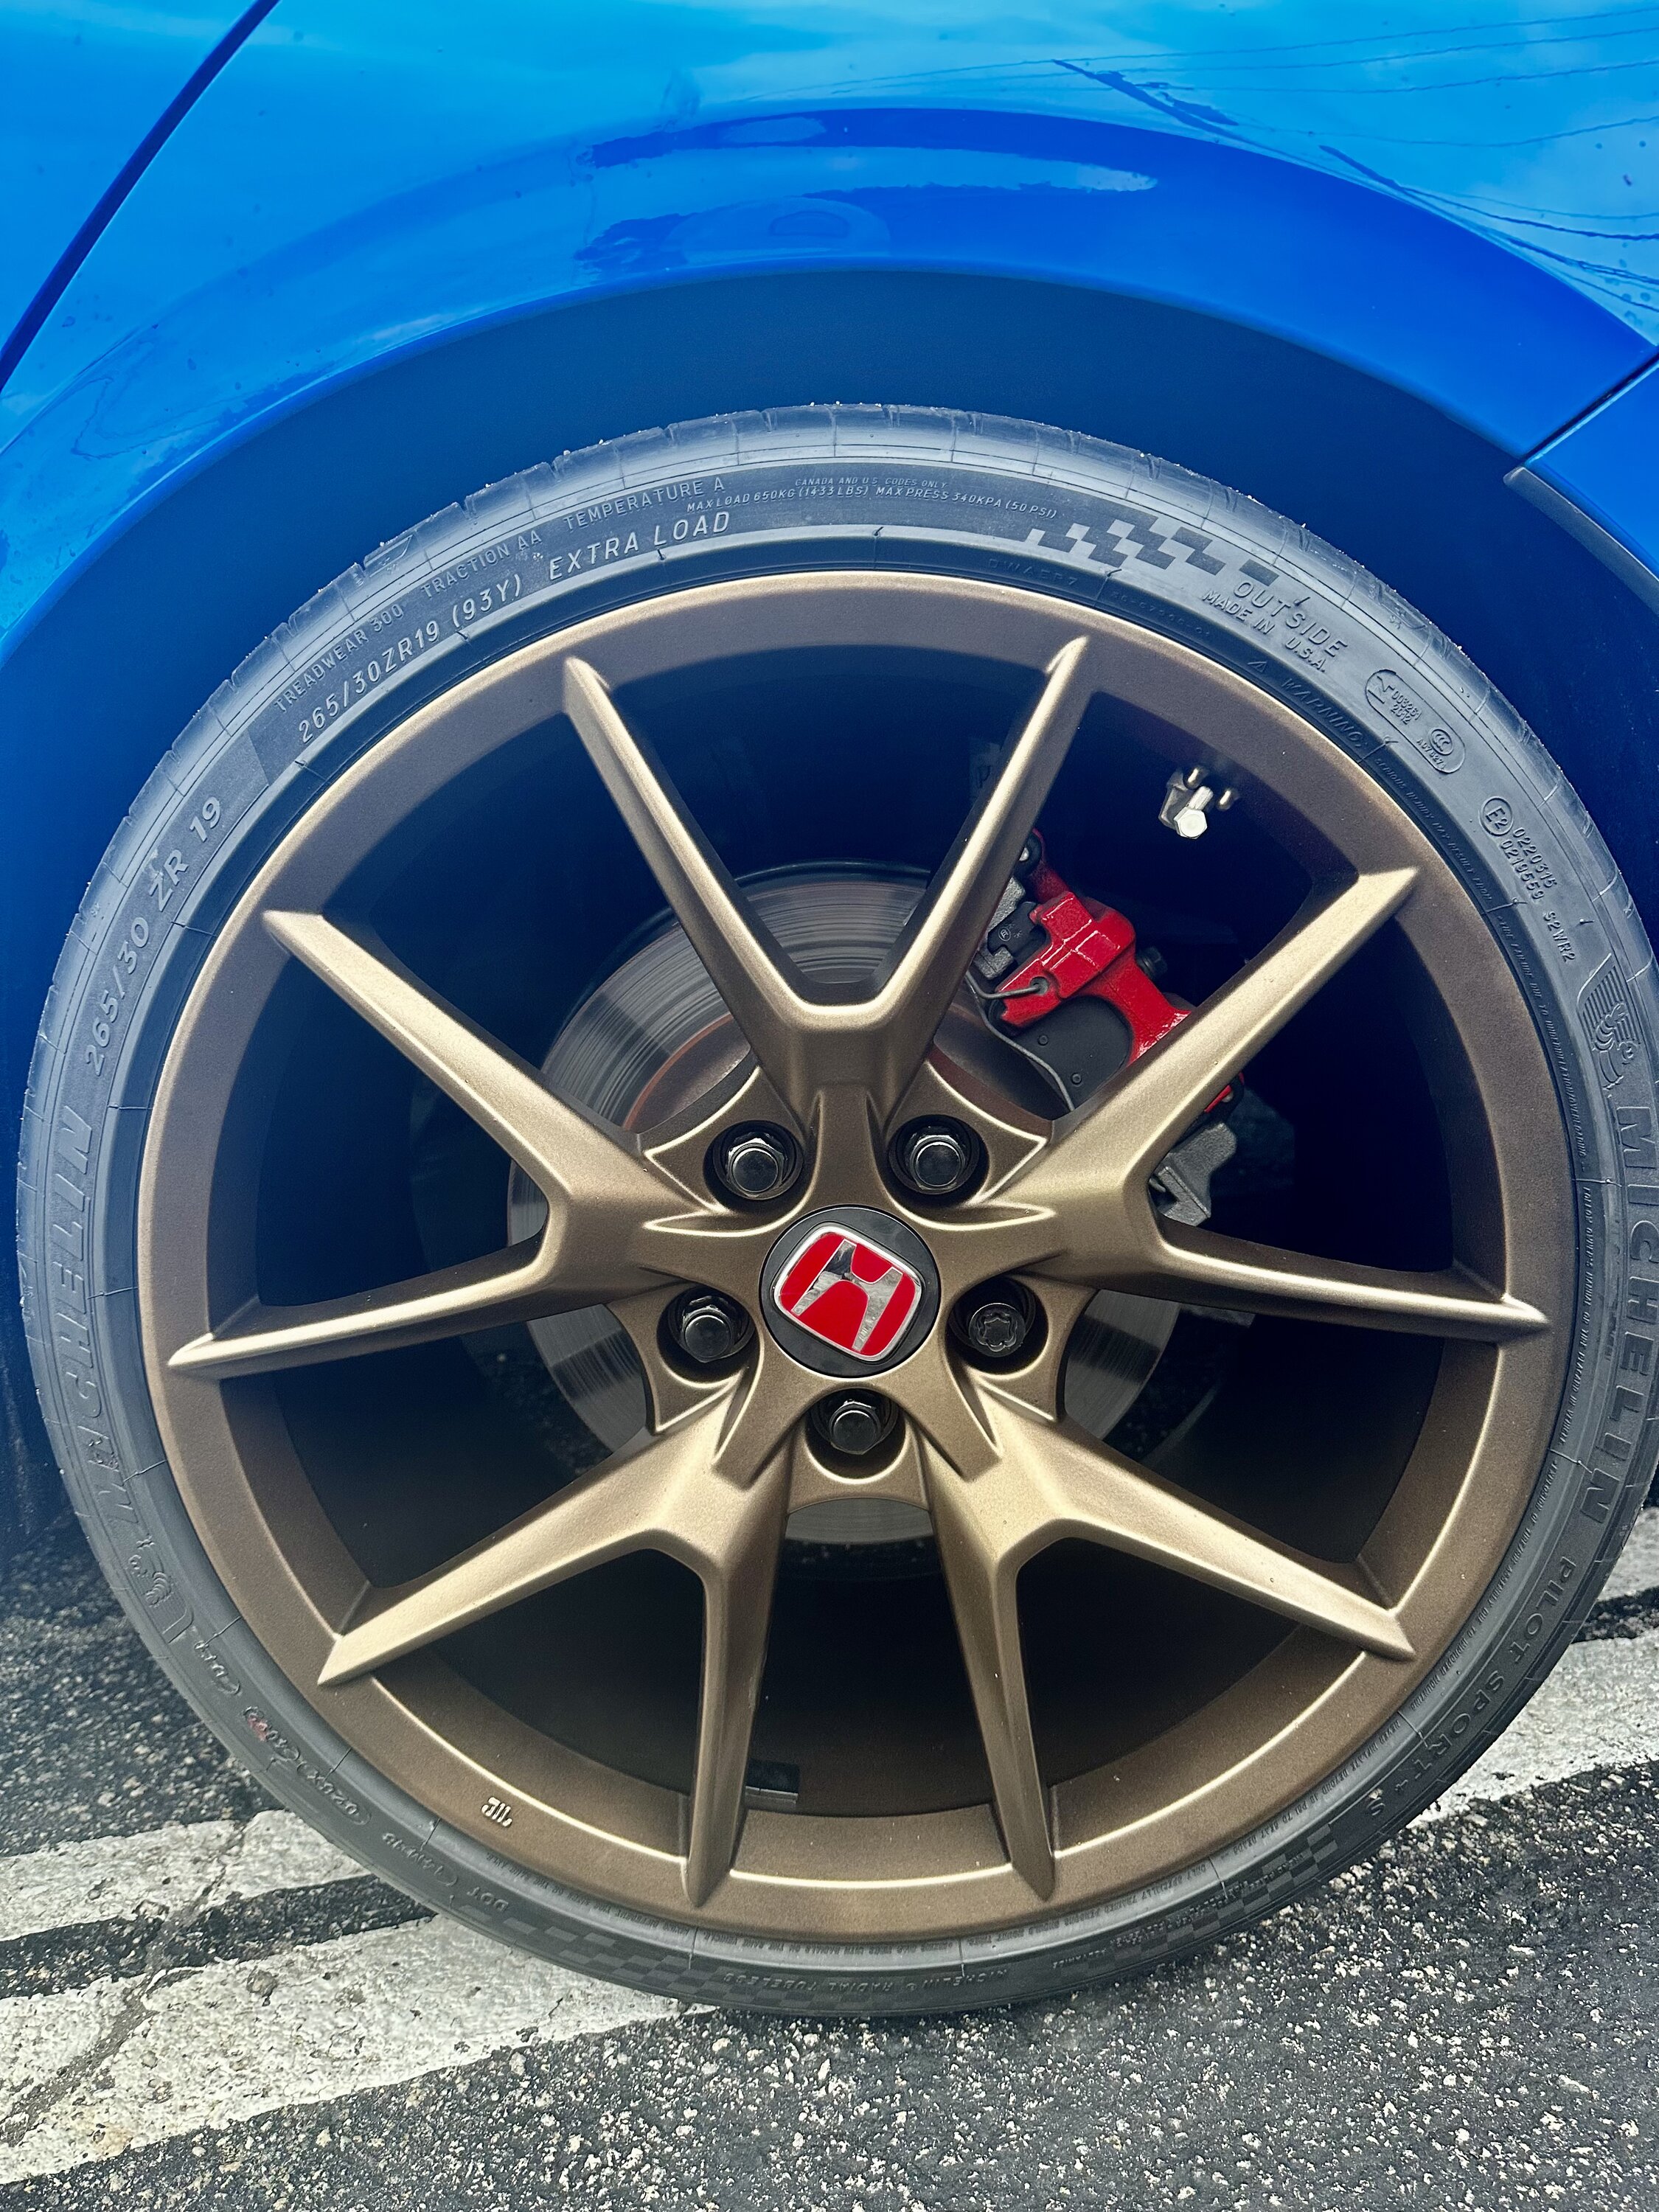 11th Gen Honda Civic Powder coated stock wheels pics? IMG_5571